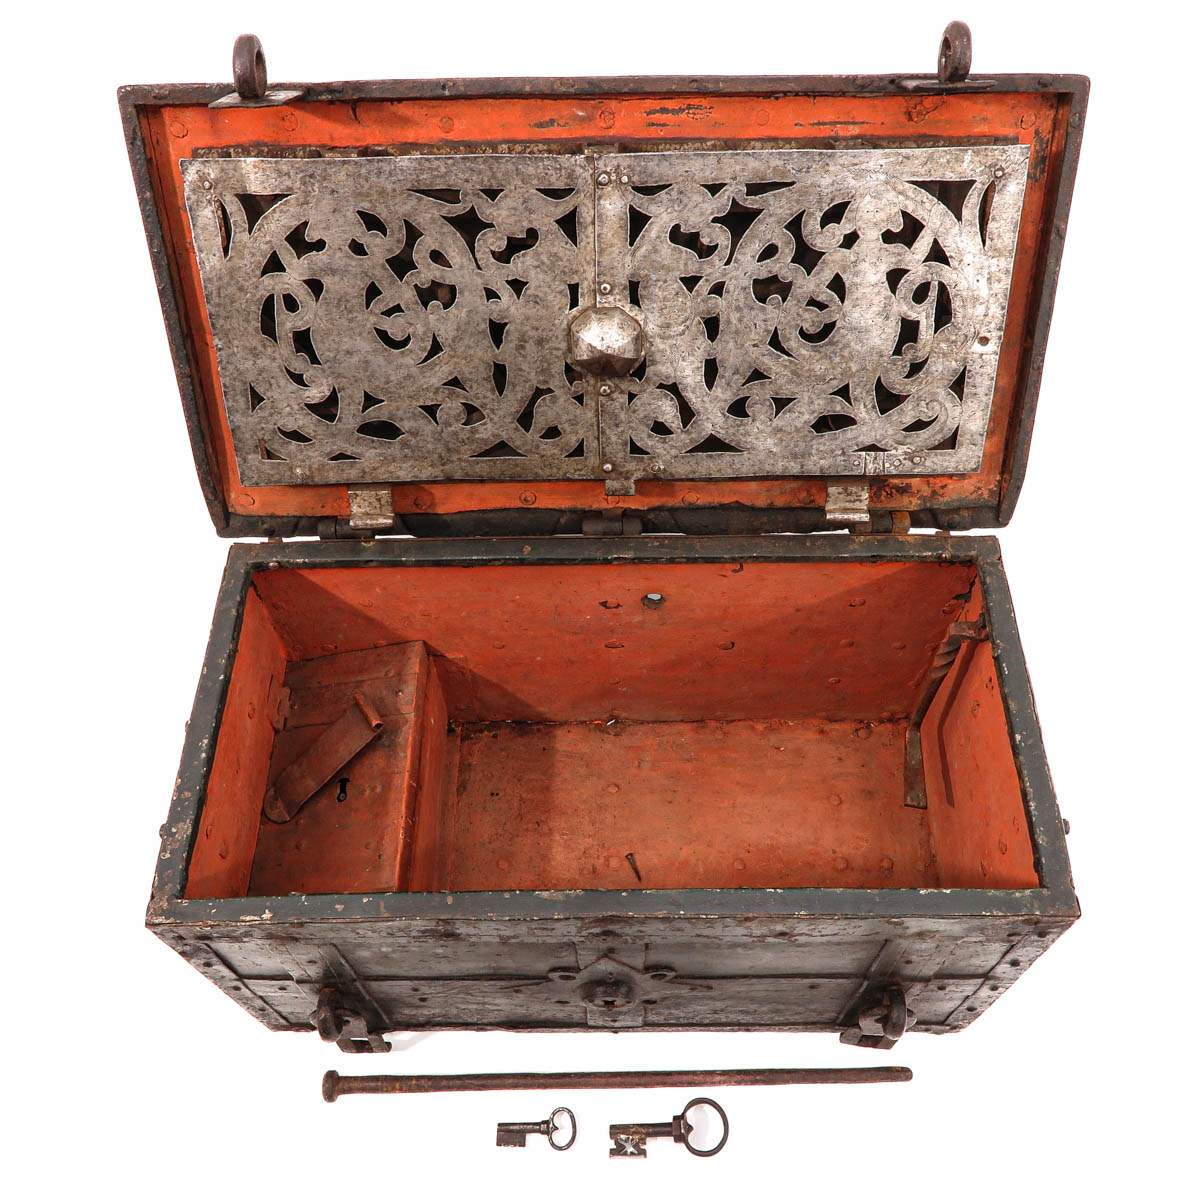 A Wrought Iron Treasure Box - Image 6 of 10